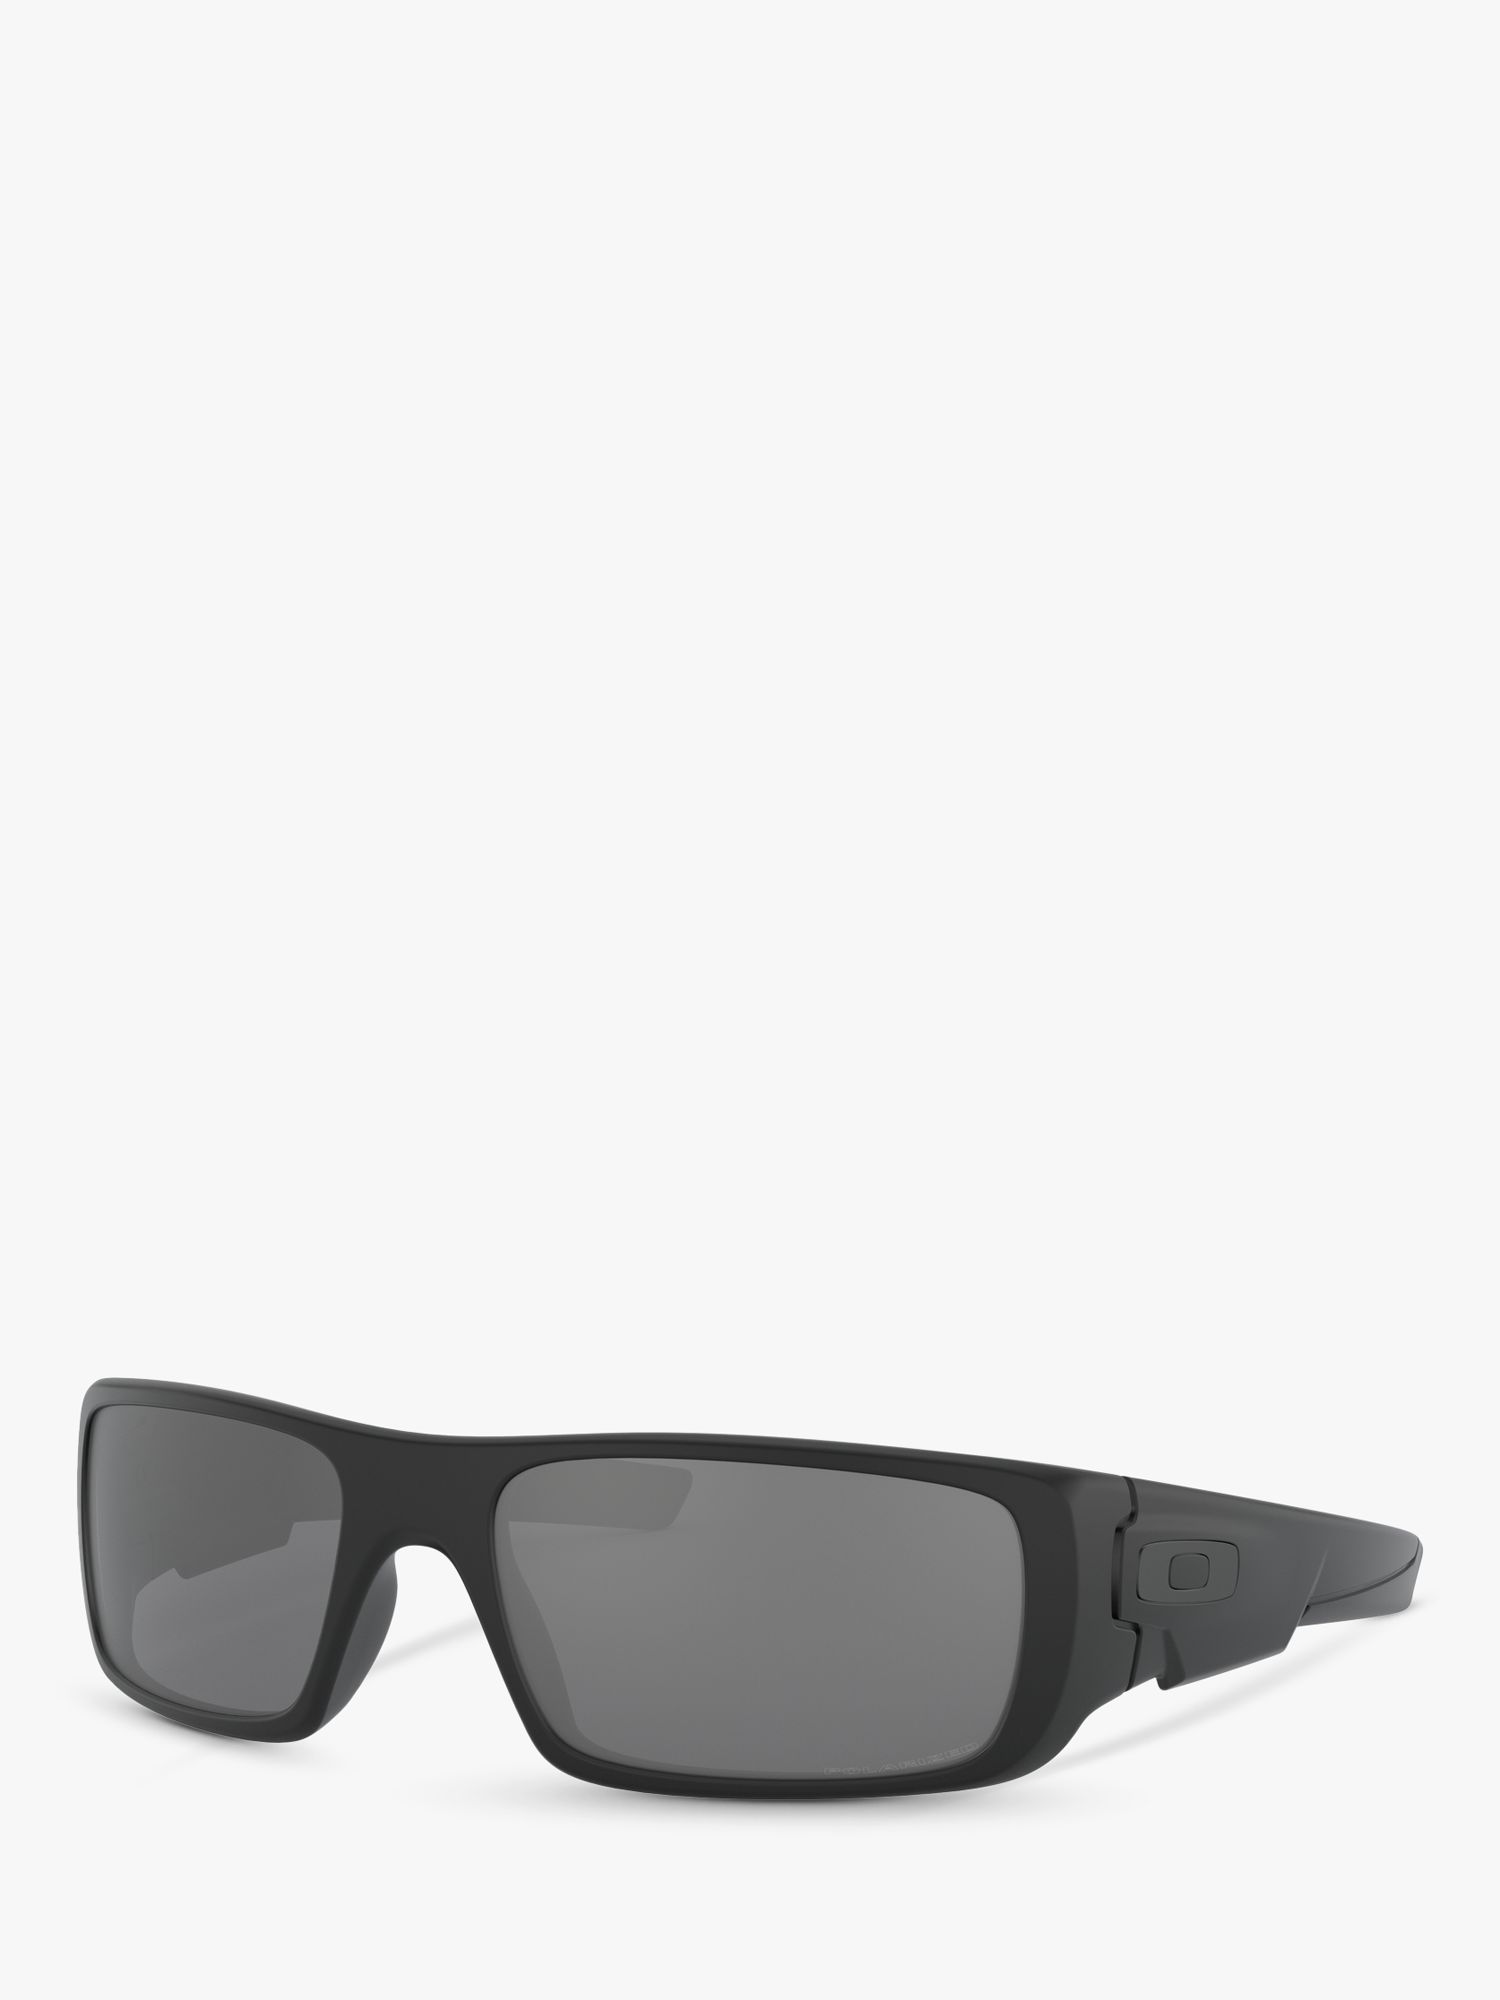 Oakley OO9239 Crankshaft Sunglasses at John Lewis & Partners